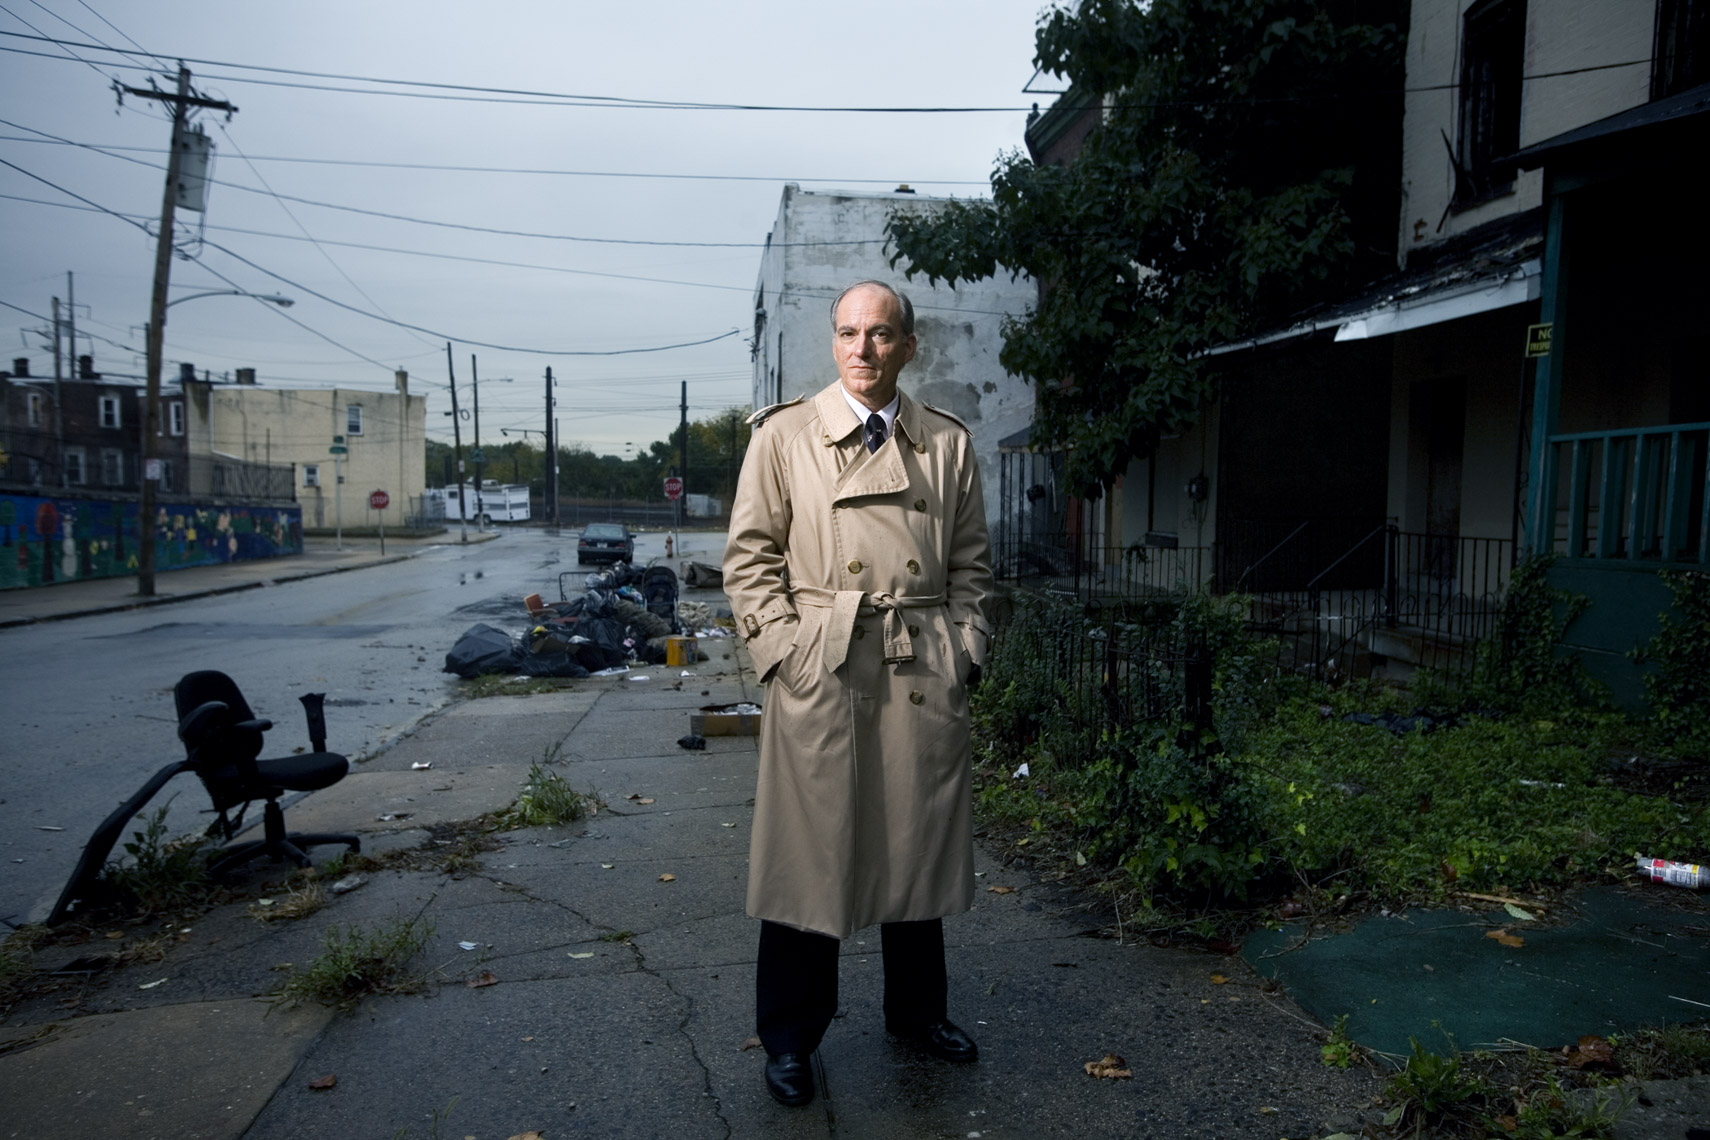 Portrait of a criminologist in a rundown urban neighborhood  by Washington DC photographer Ryan Donnell